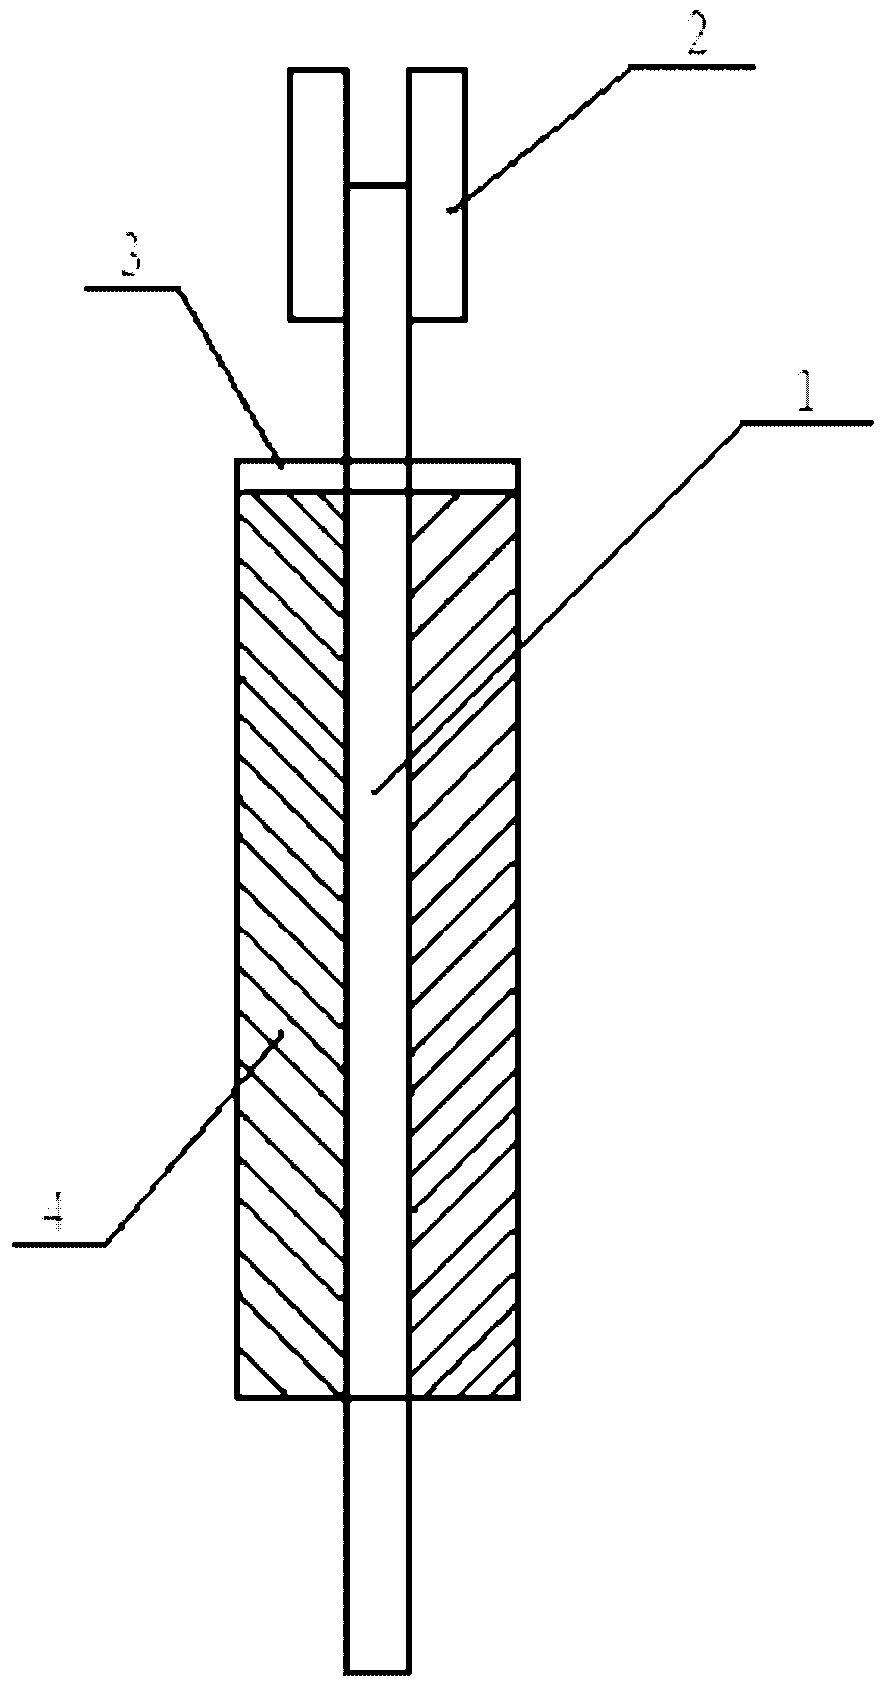 Novel connecting rod plunger piston mechanism of press machine